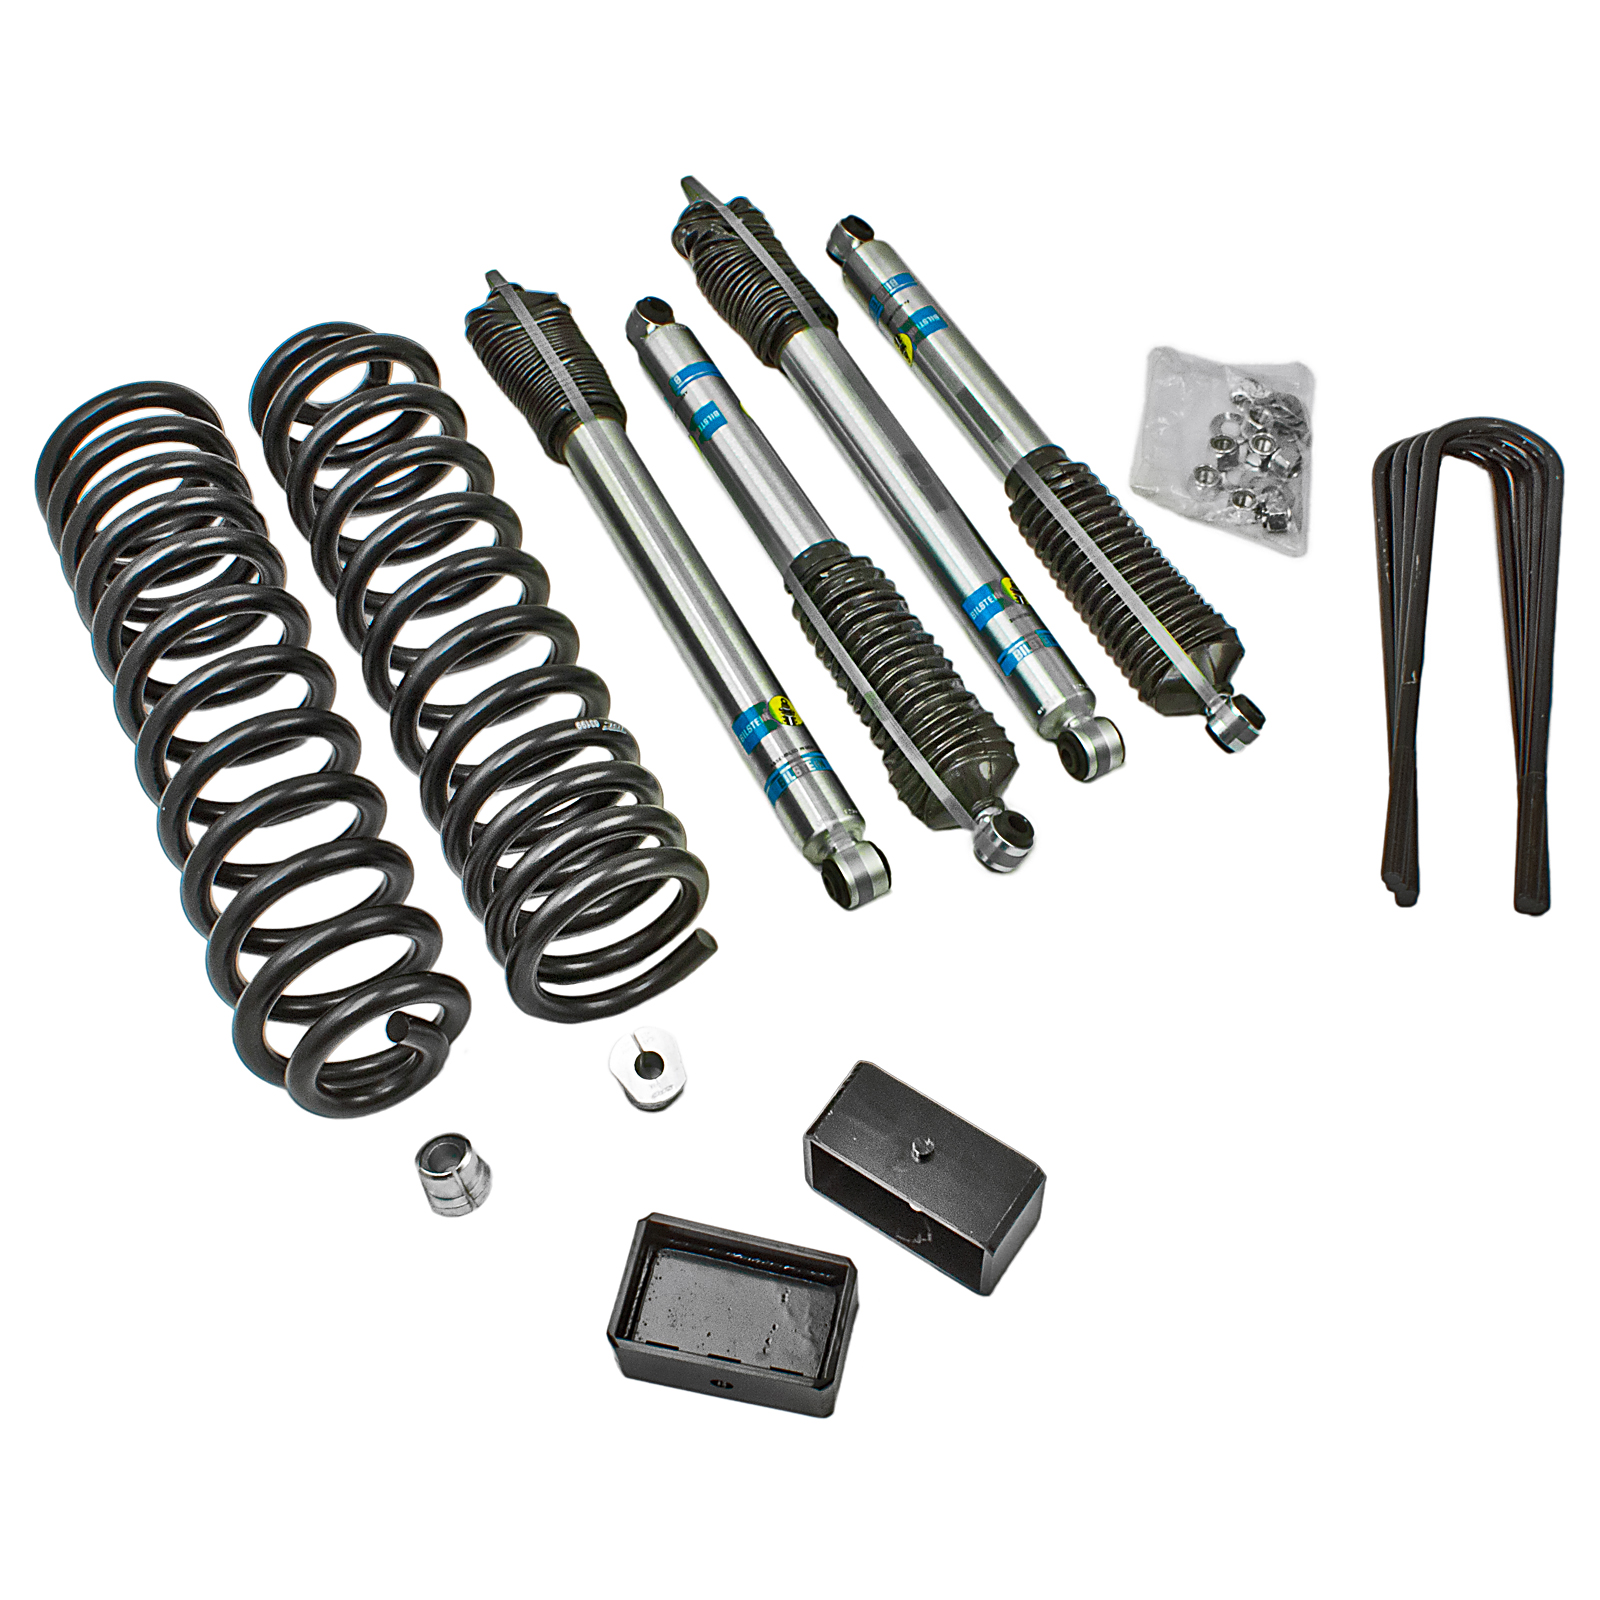 Ford Lift Kit For 2015 Ford F350 Truck Lift Kits 